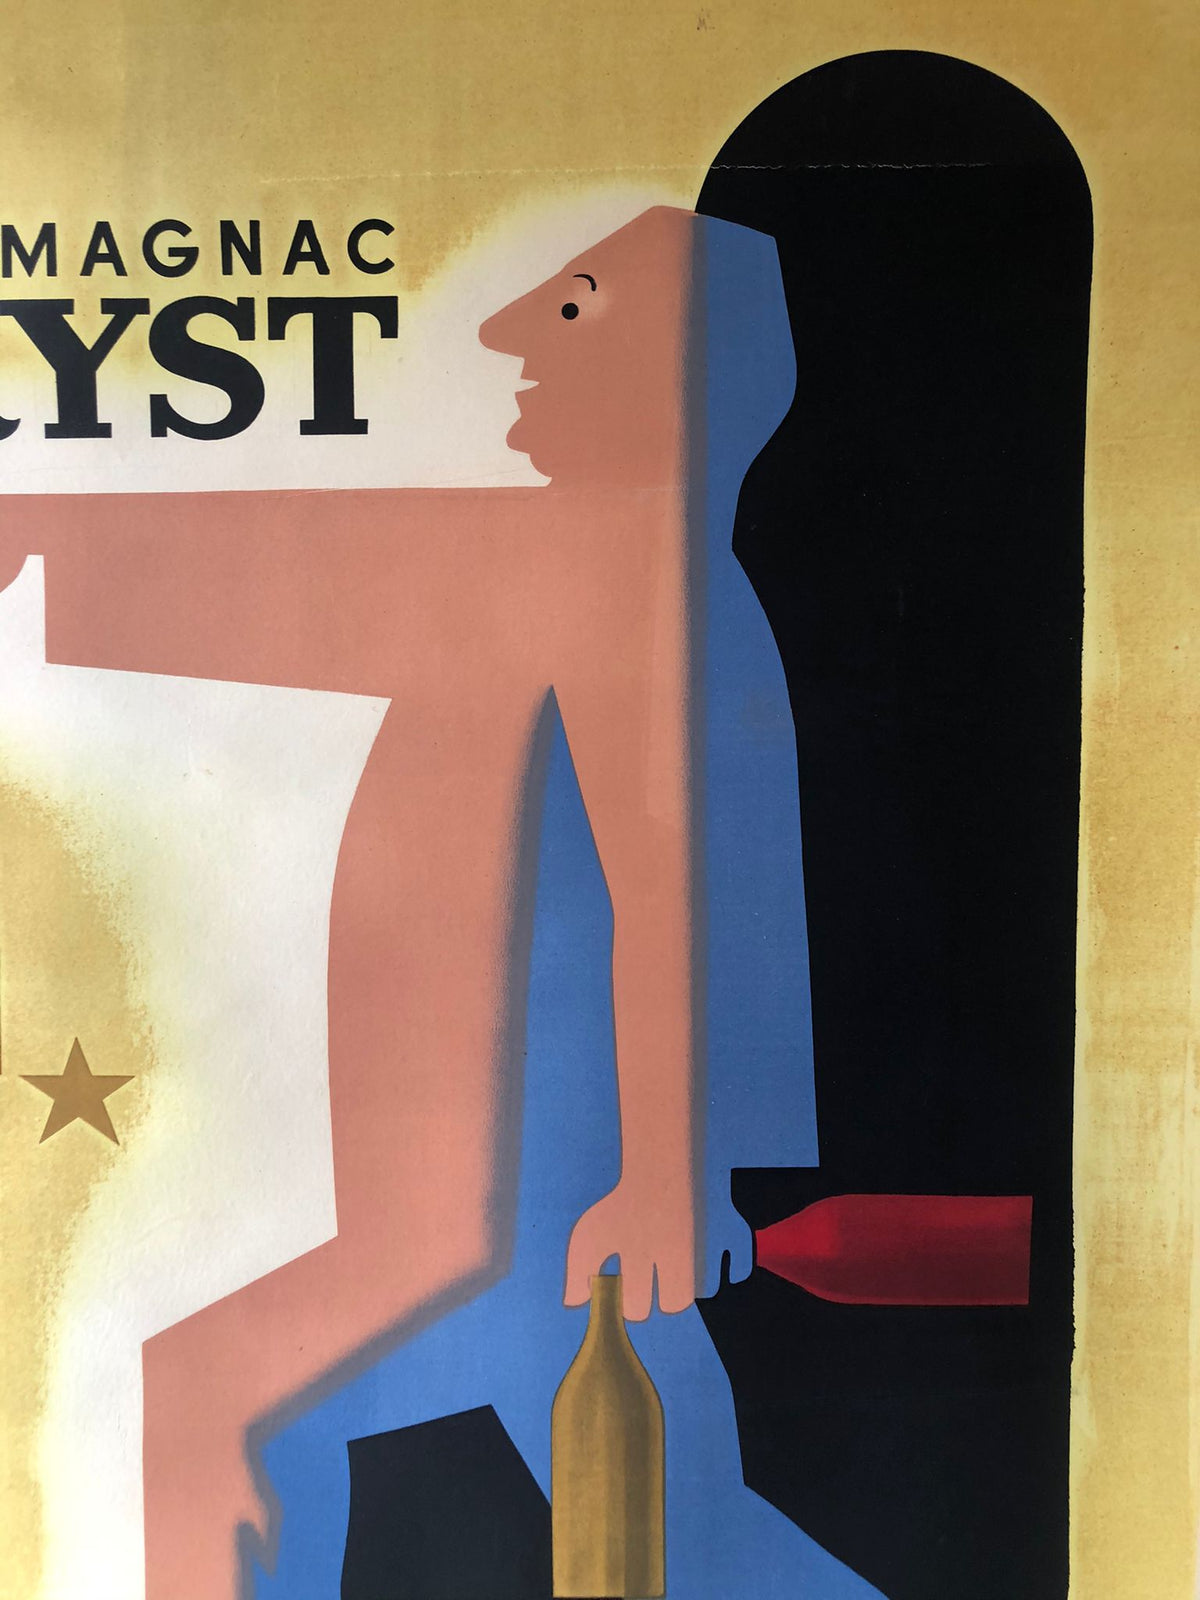 Armagnac Ryst by Raymond Savignac (Large)